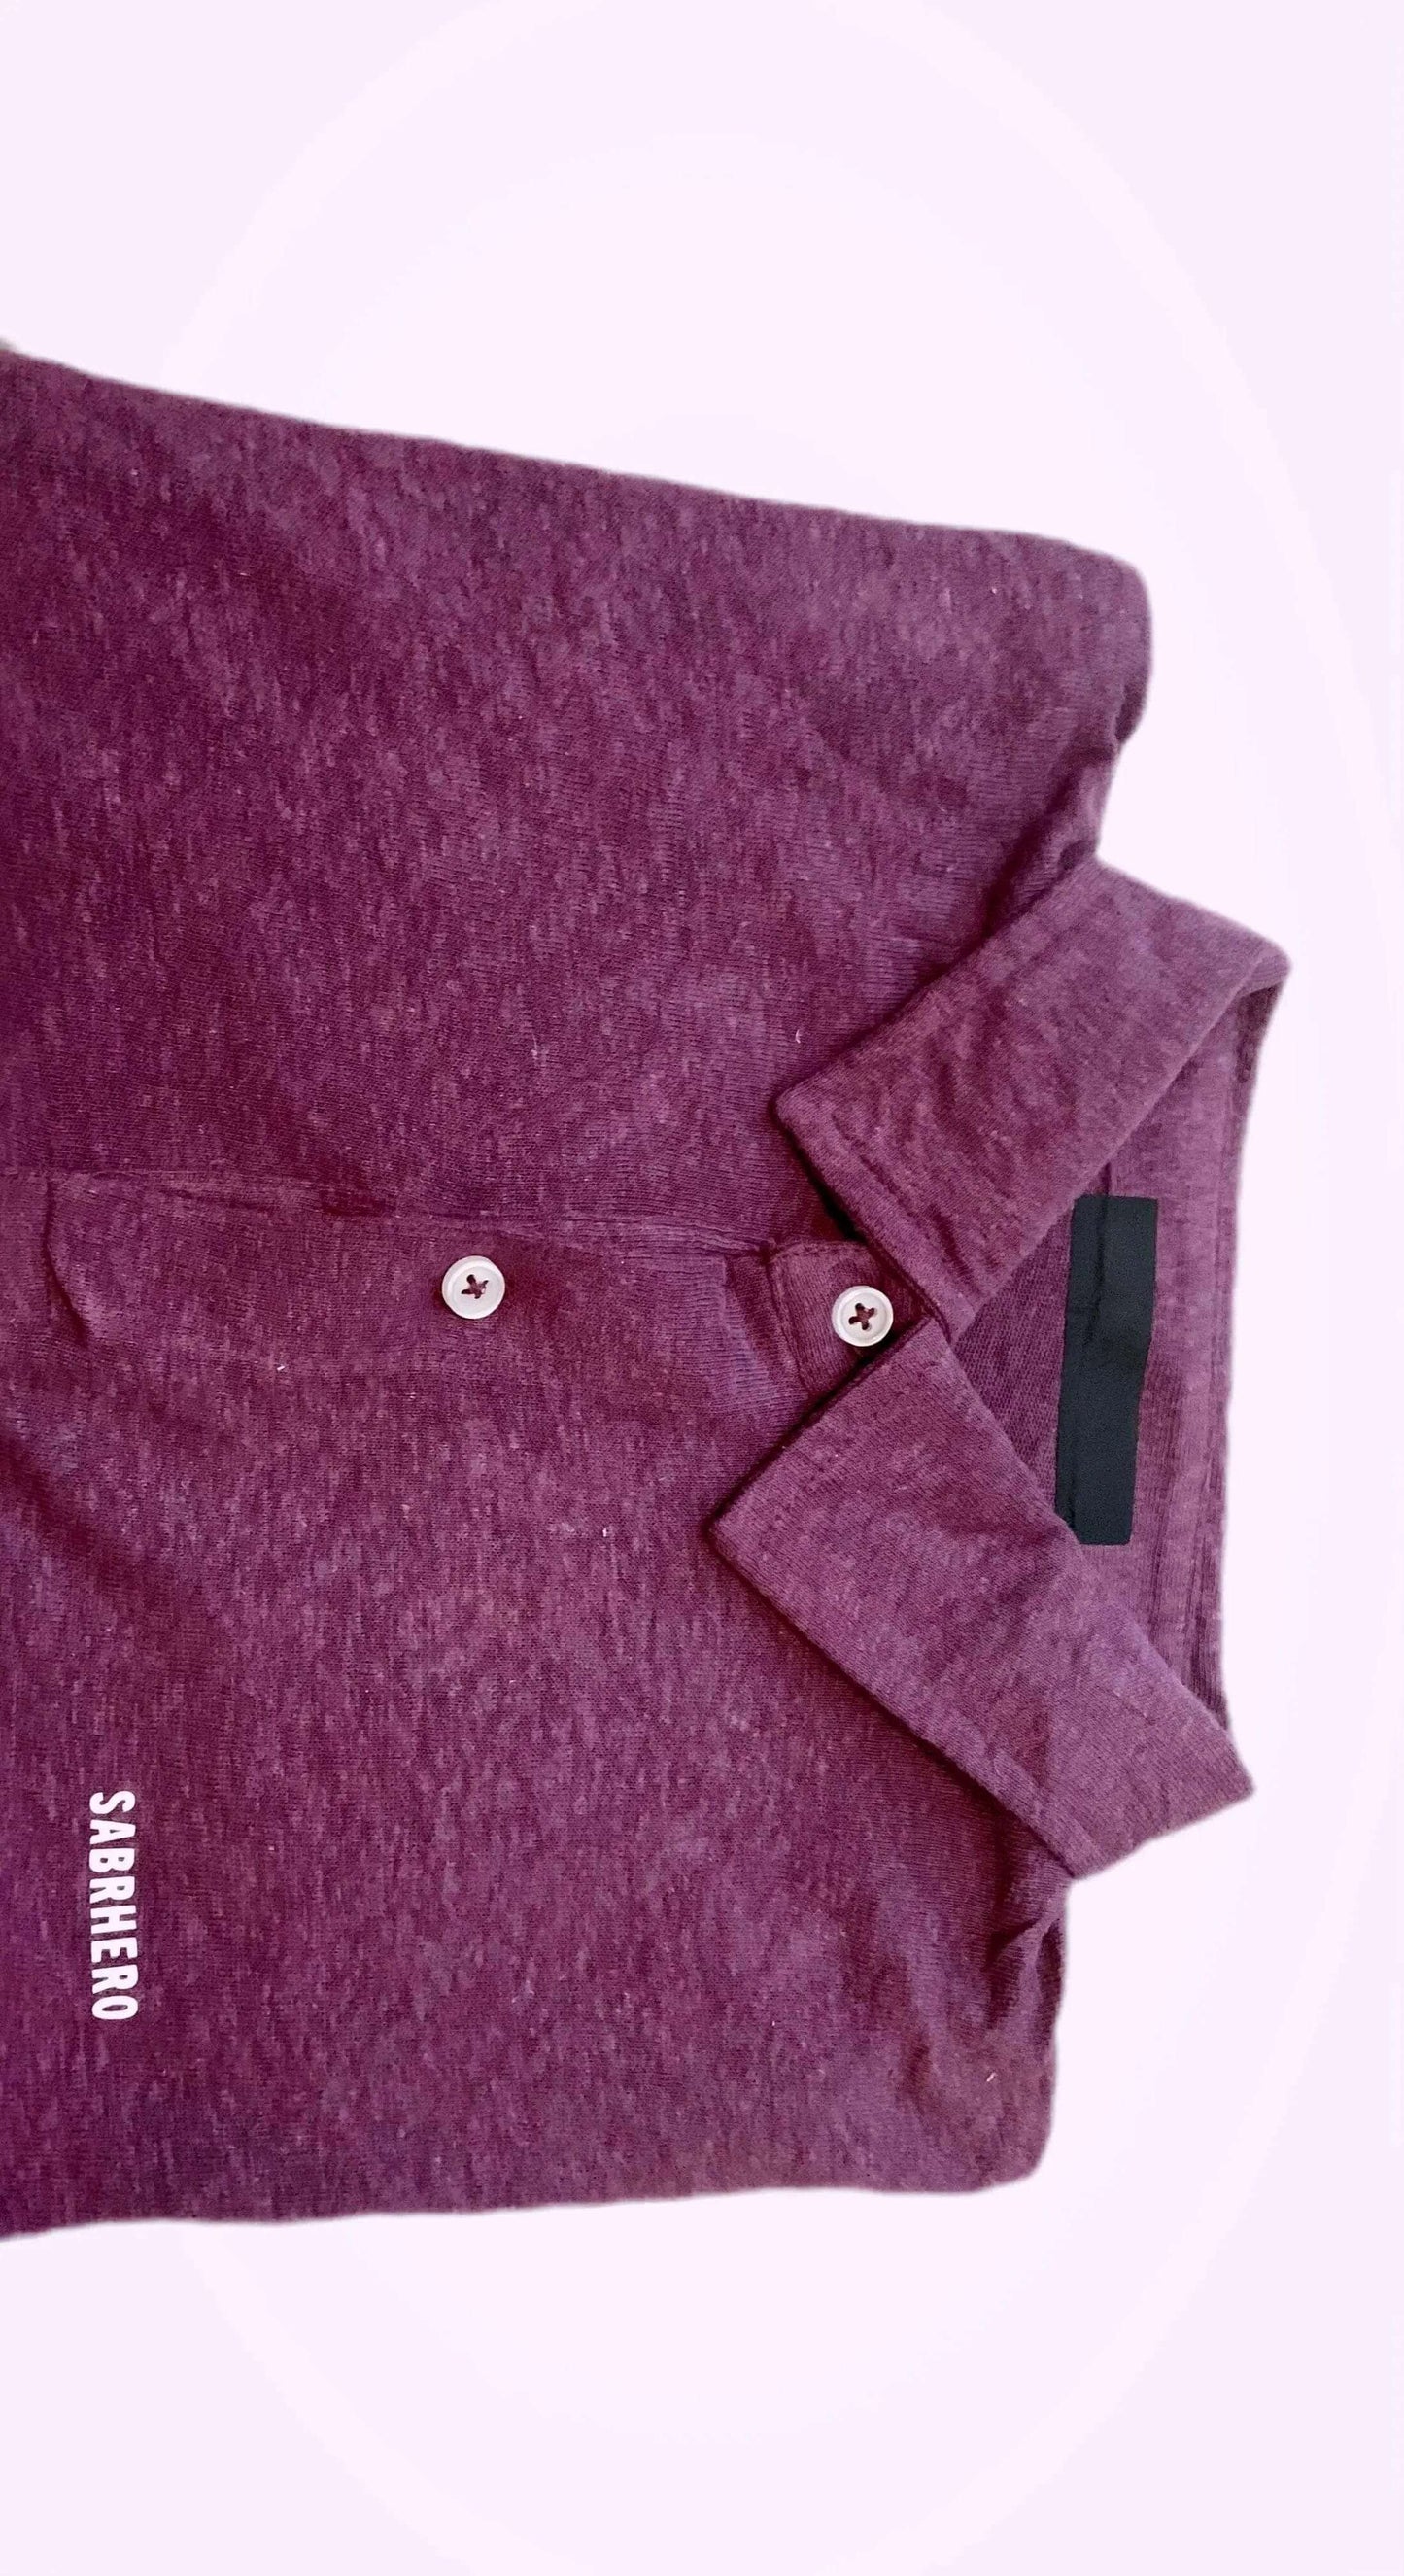 SABRHERO Purple Linen Polo Shirt - Luxury tennis apparel by SABRHERO | SABRHERO